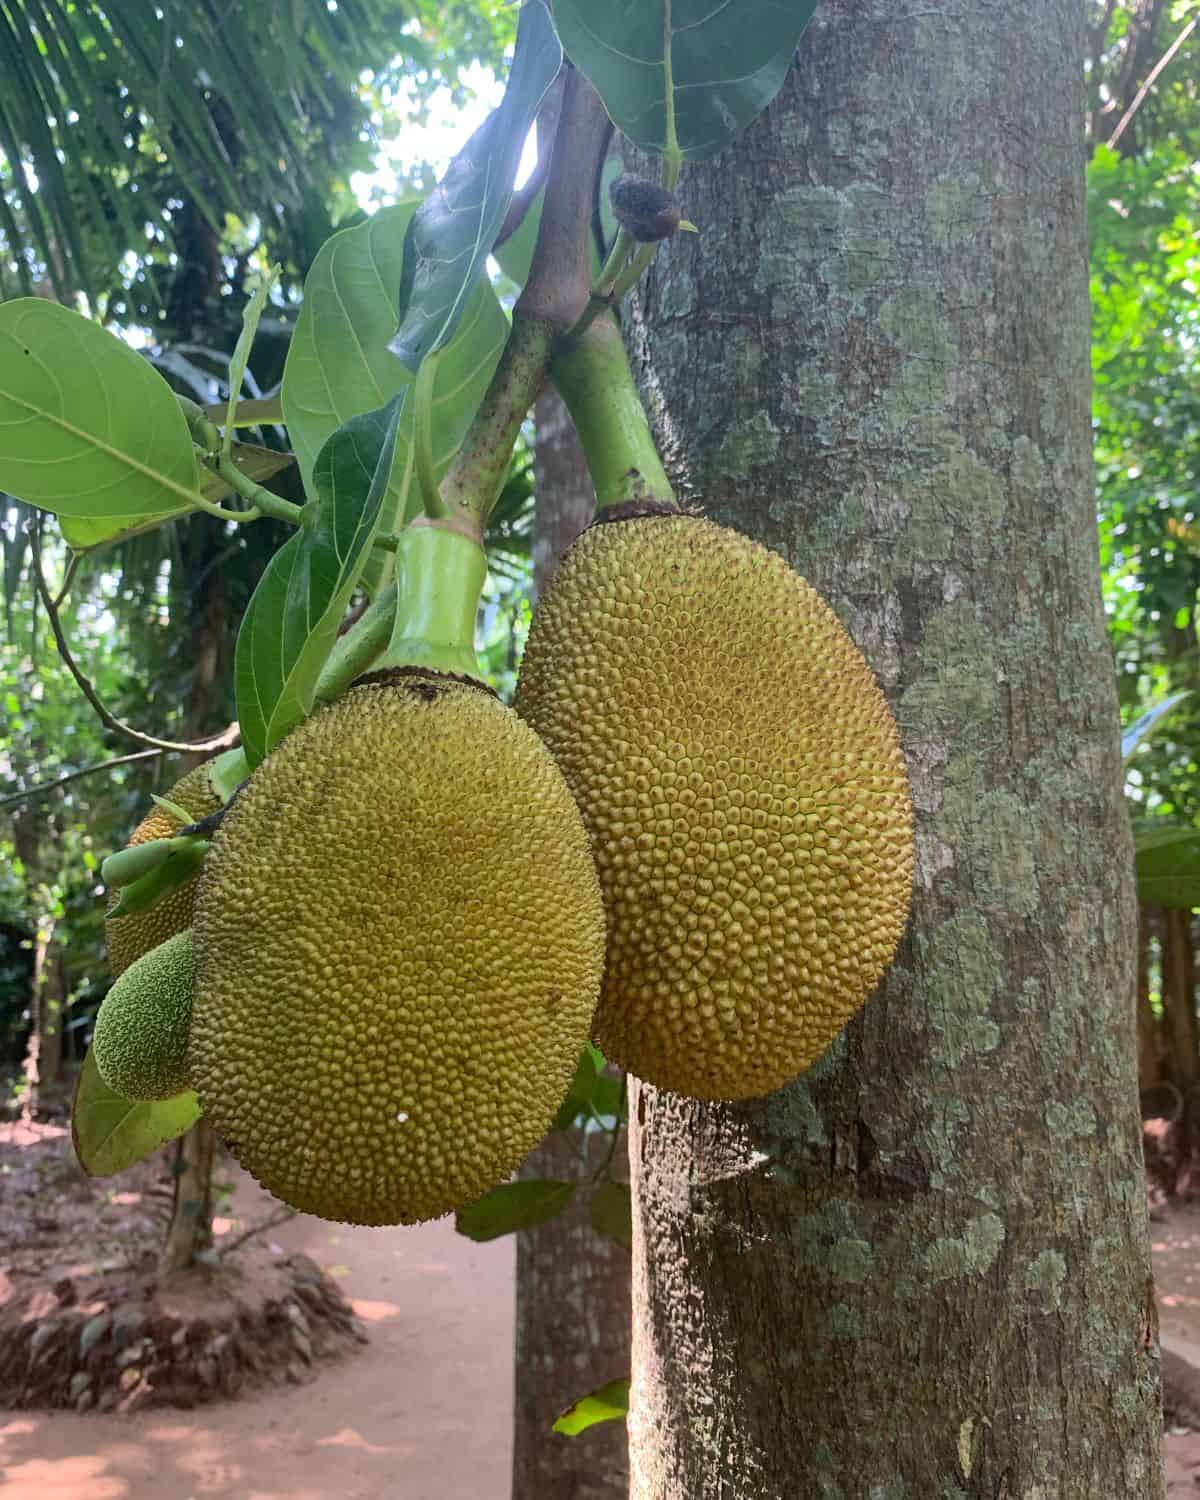 Two jackfruits growing on a tree.